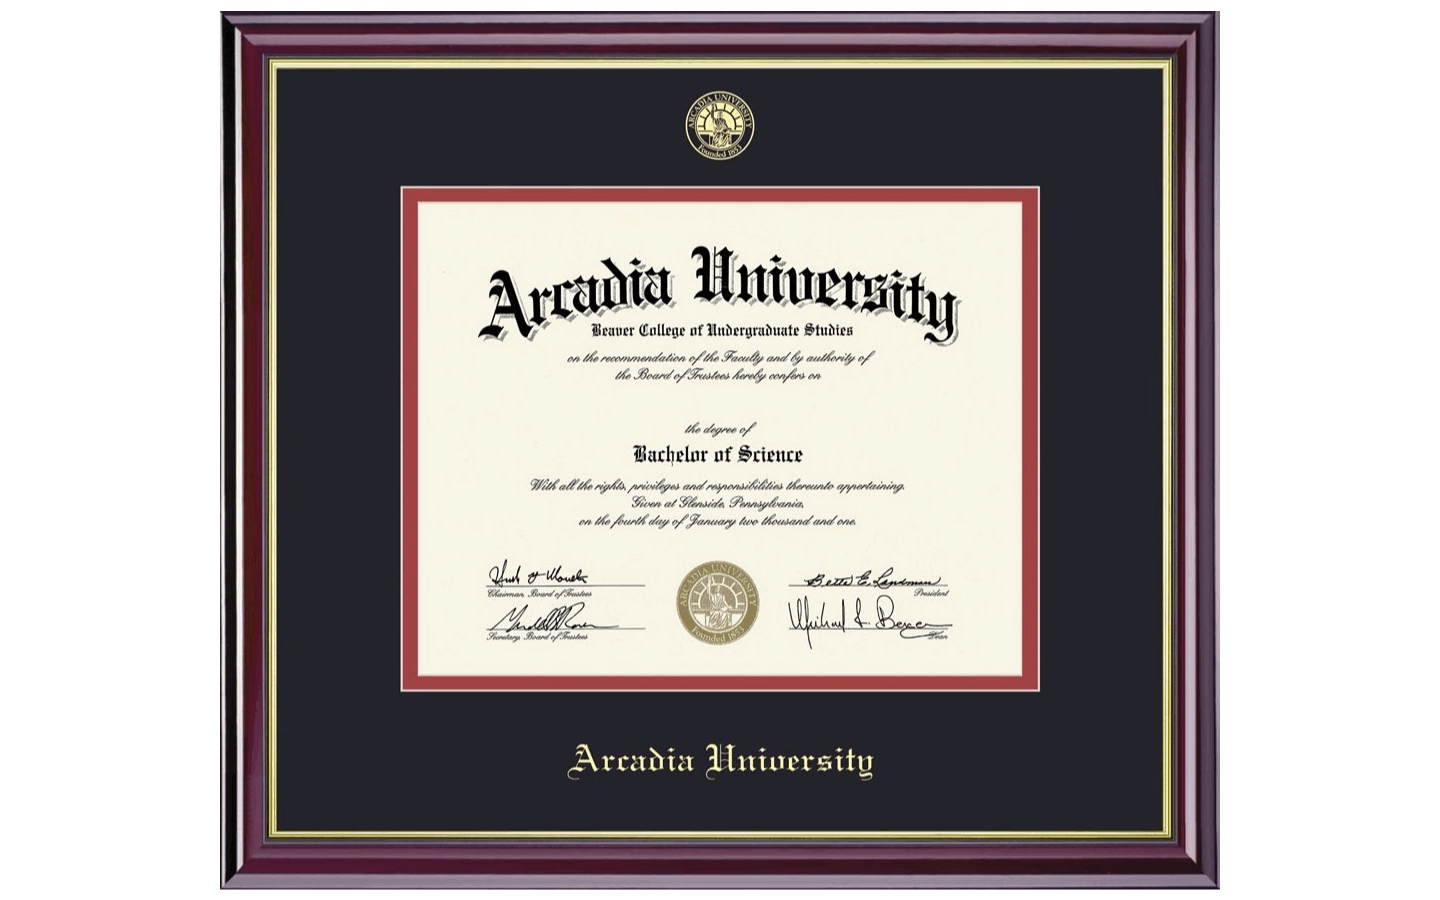 A framed diploma from Arcadia University